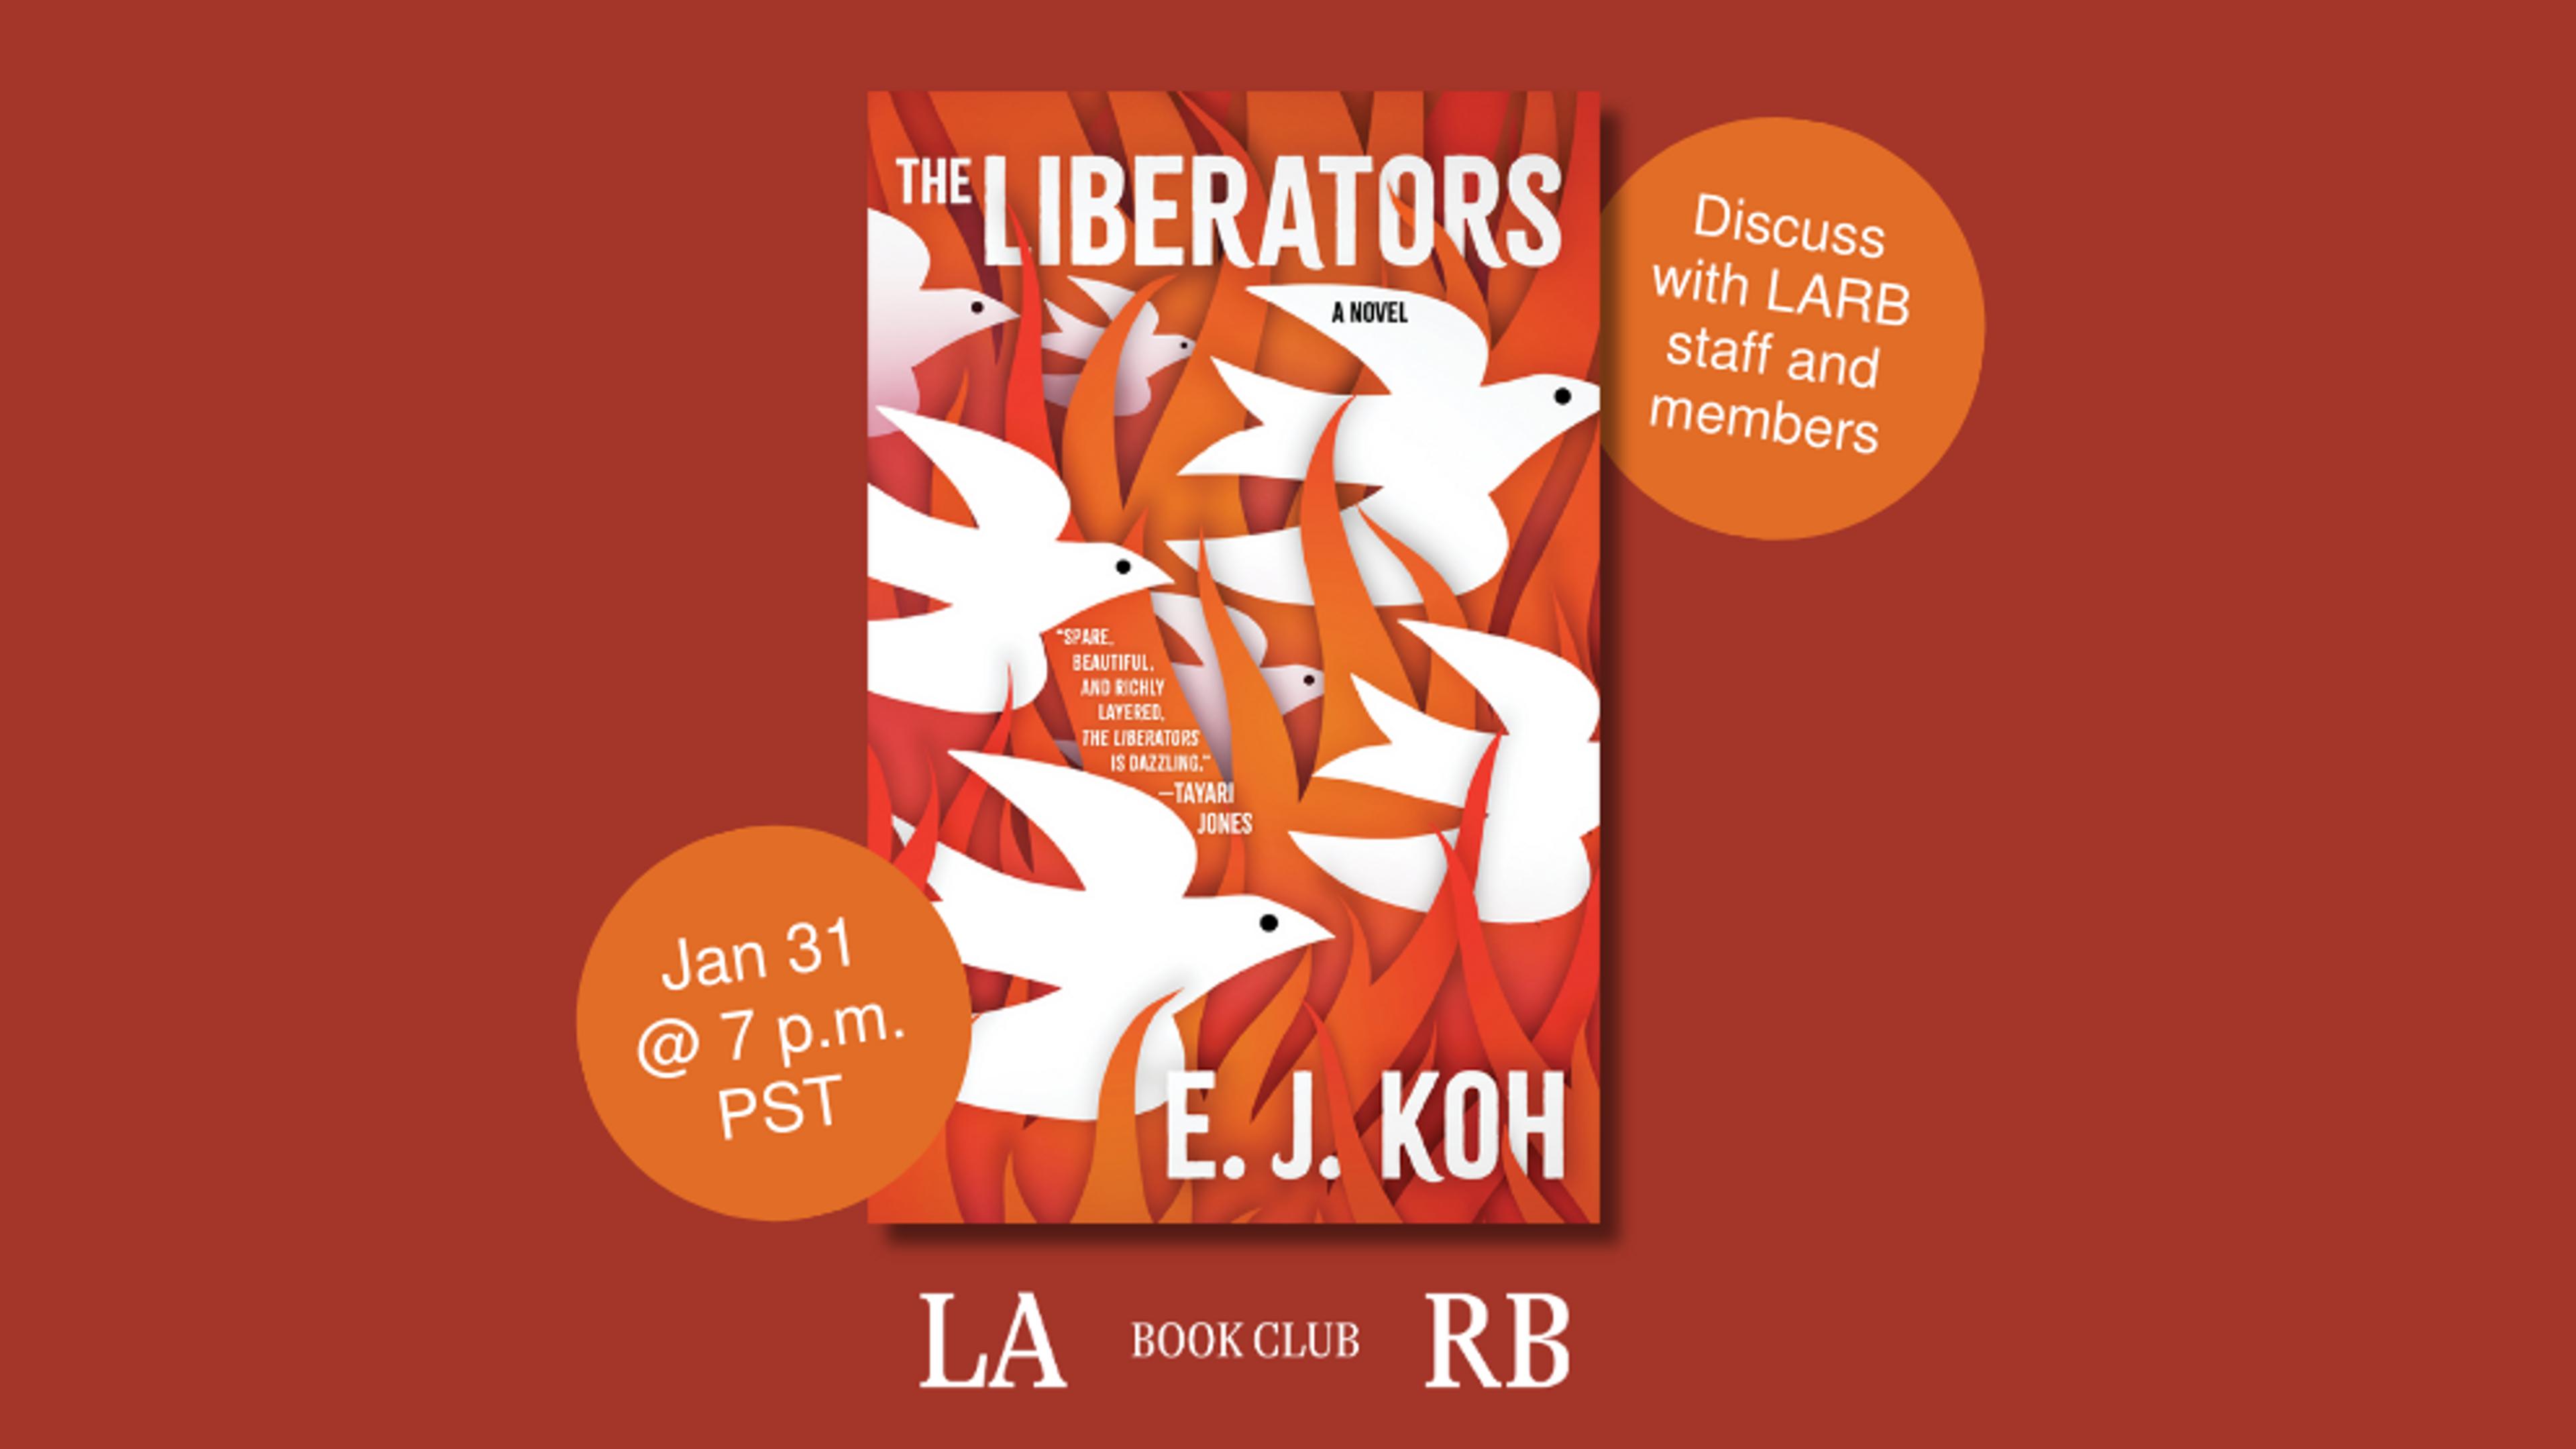 LARB Book Club Discussion: “The Liberators” by E. J. Koh